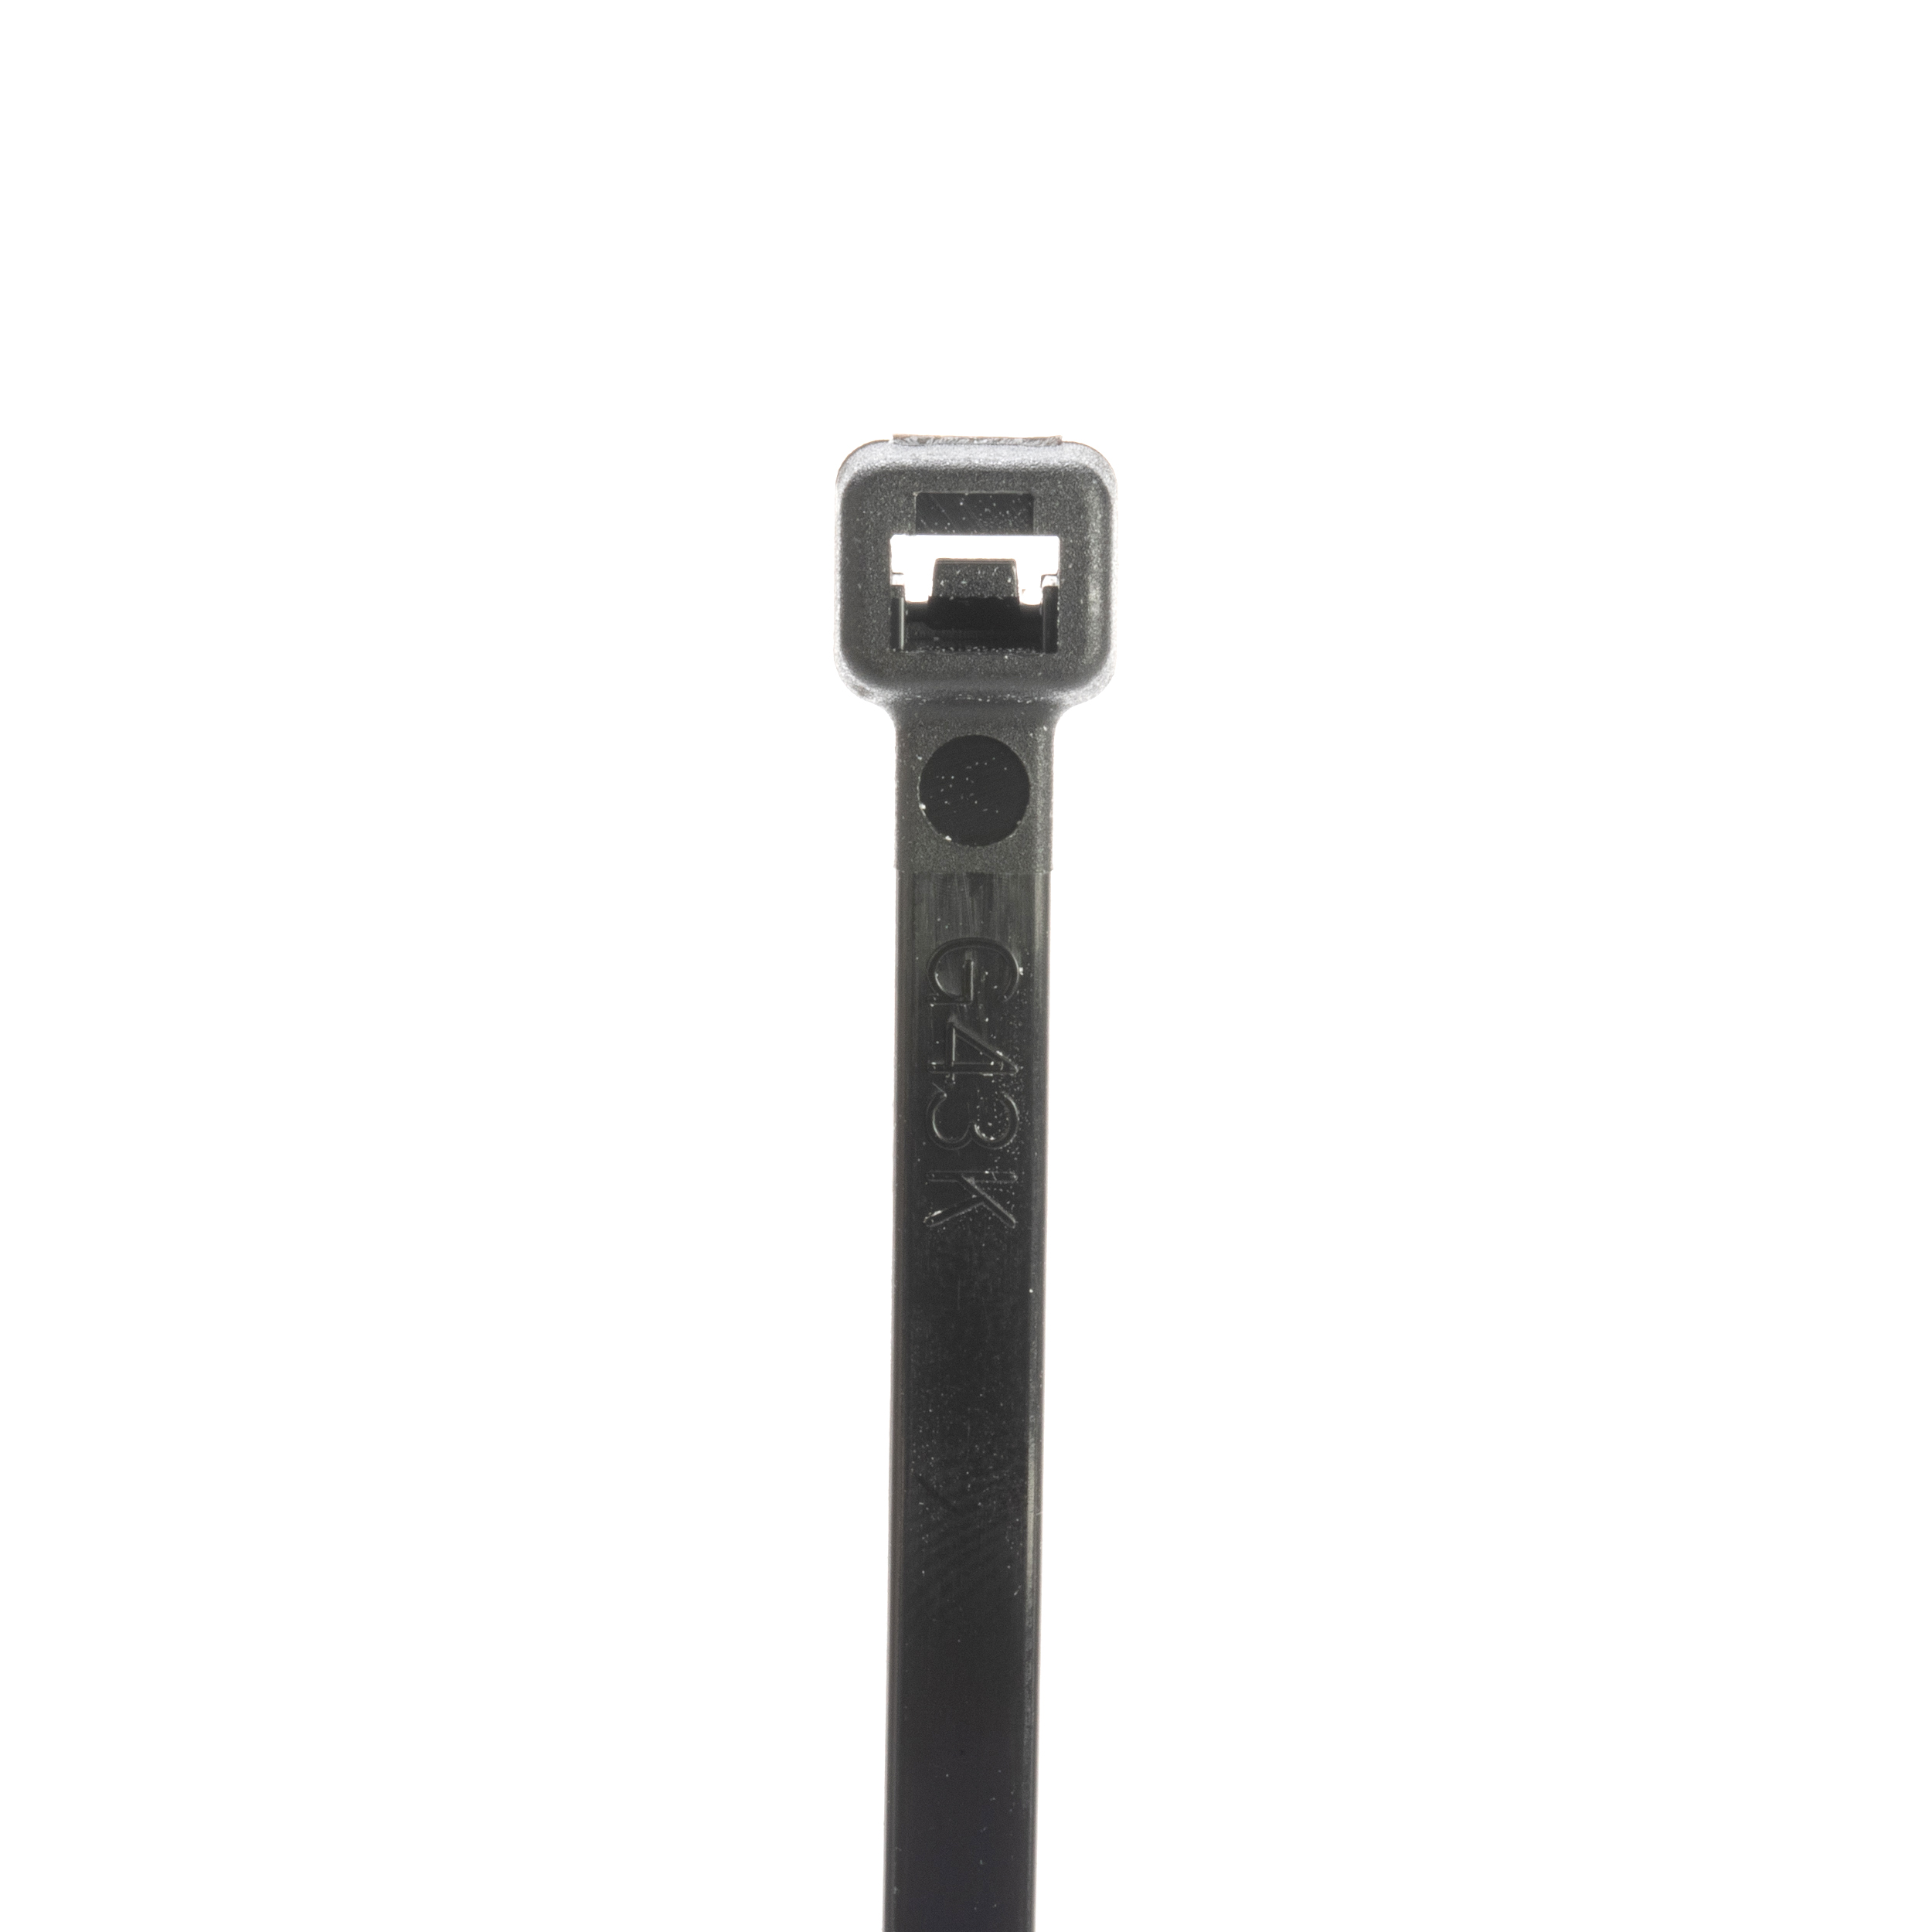 PAN S14-120-L0 14.49" CABLE TIE 120 TENSILE STRENGTH BLACK